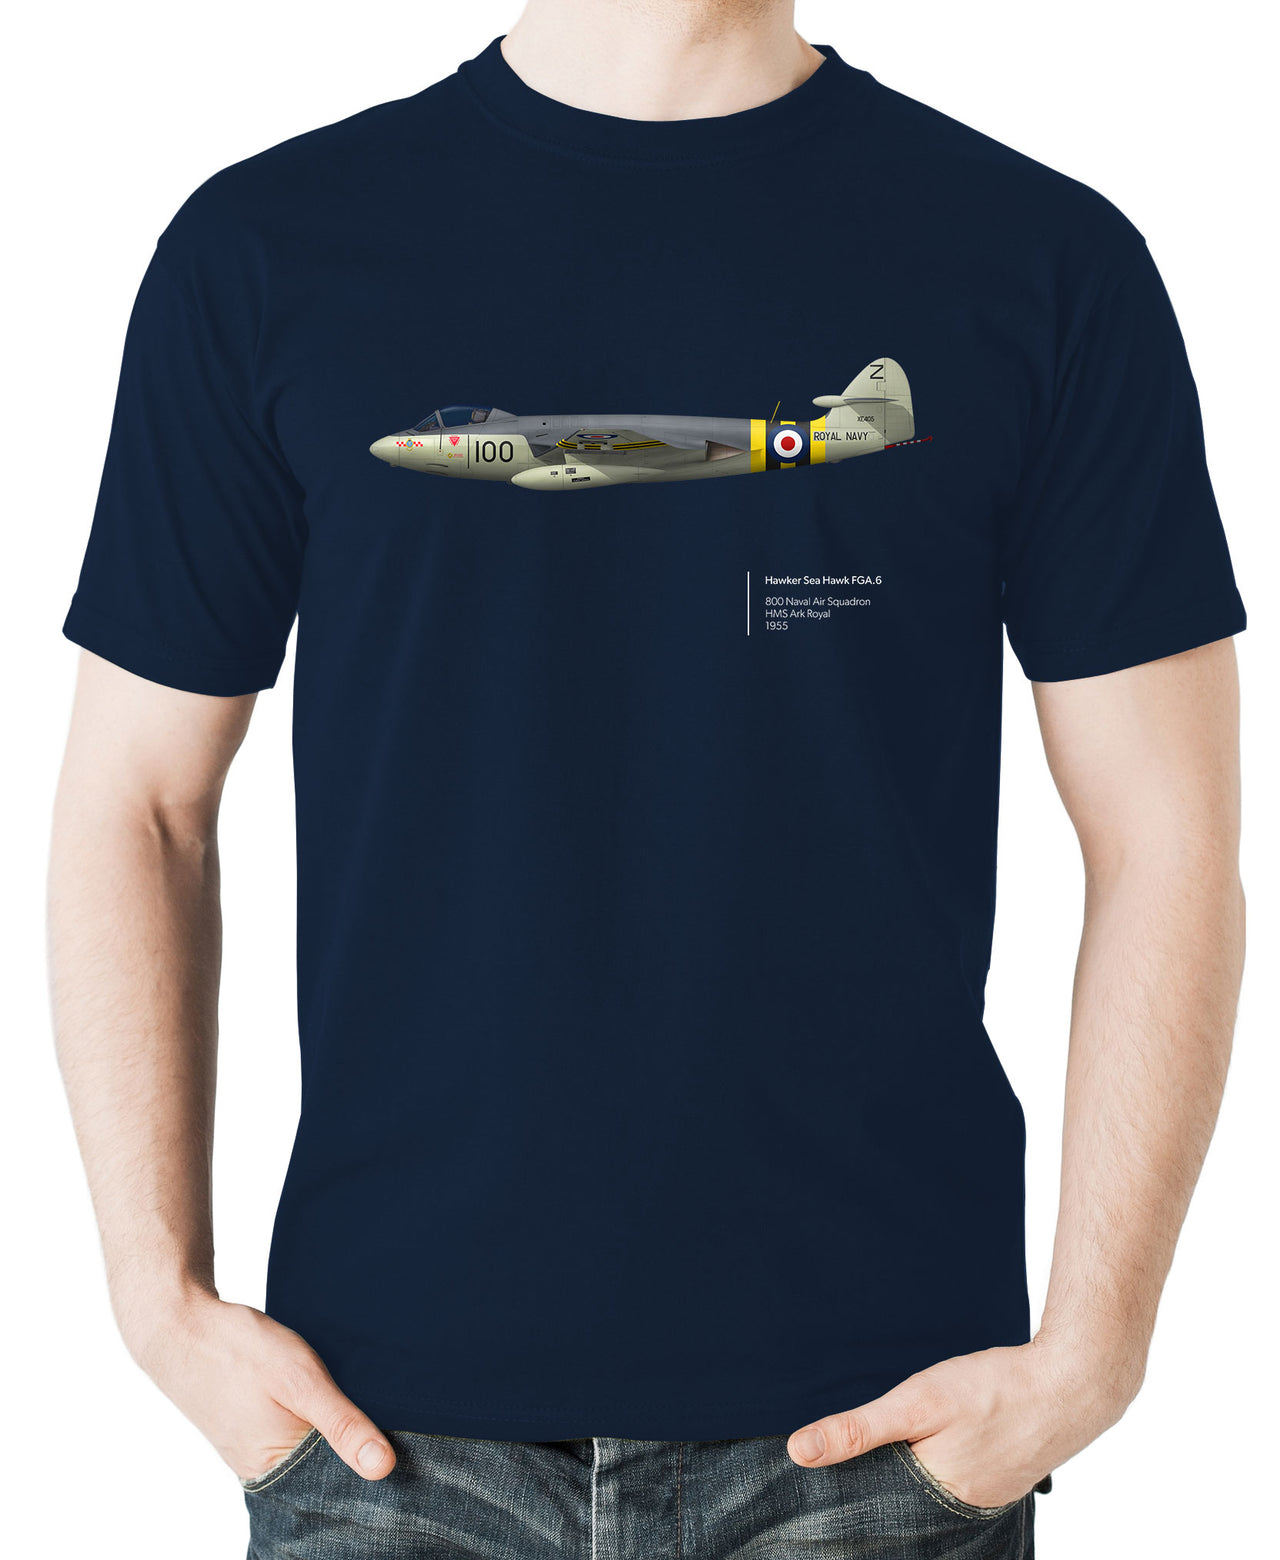 Sea Hawk FGA.6 - T-shirt